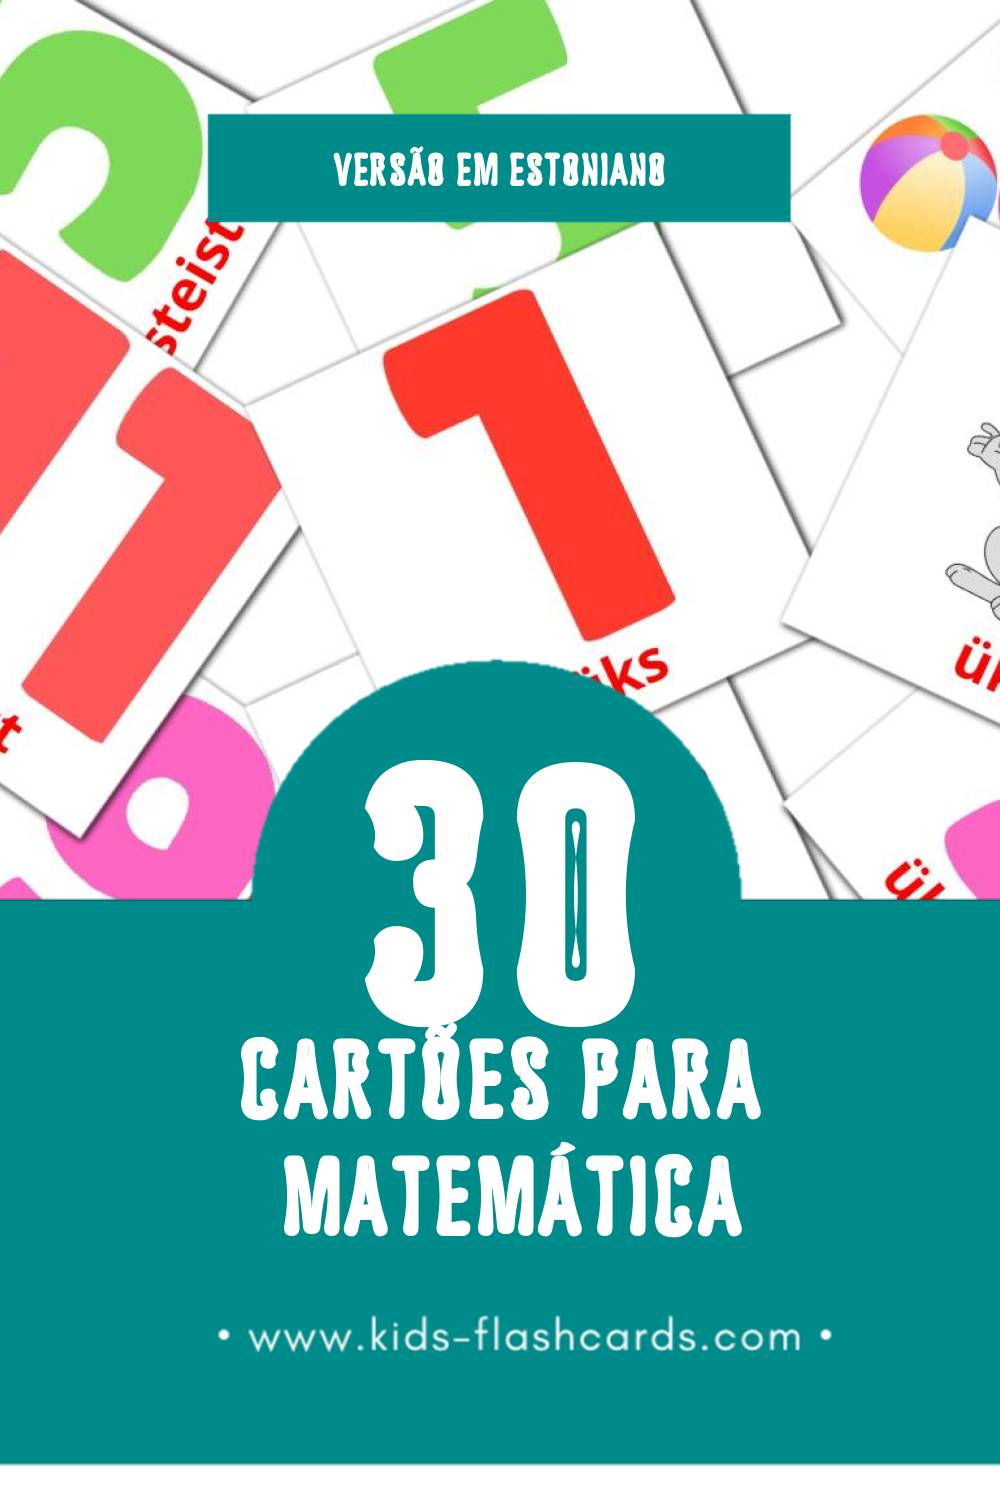 Flashcards de matemaatika Visuais para Toddlers (30 cartões em Estoniano)